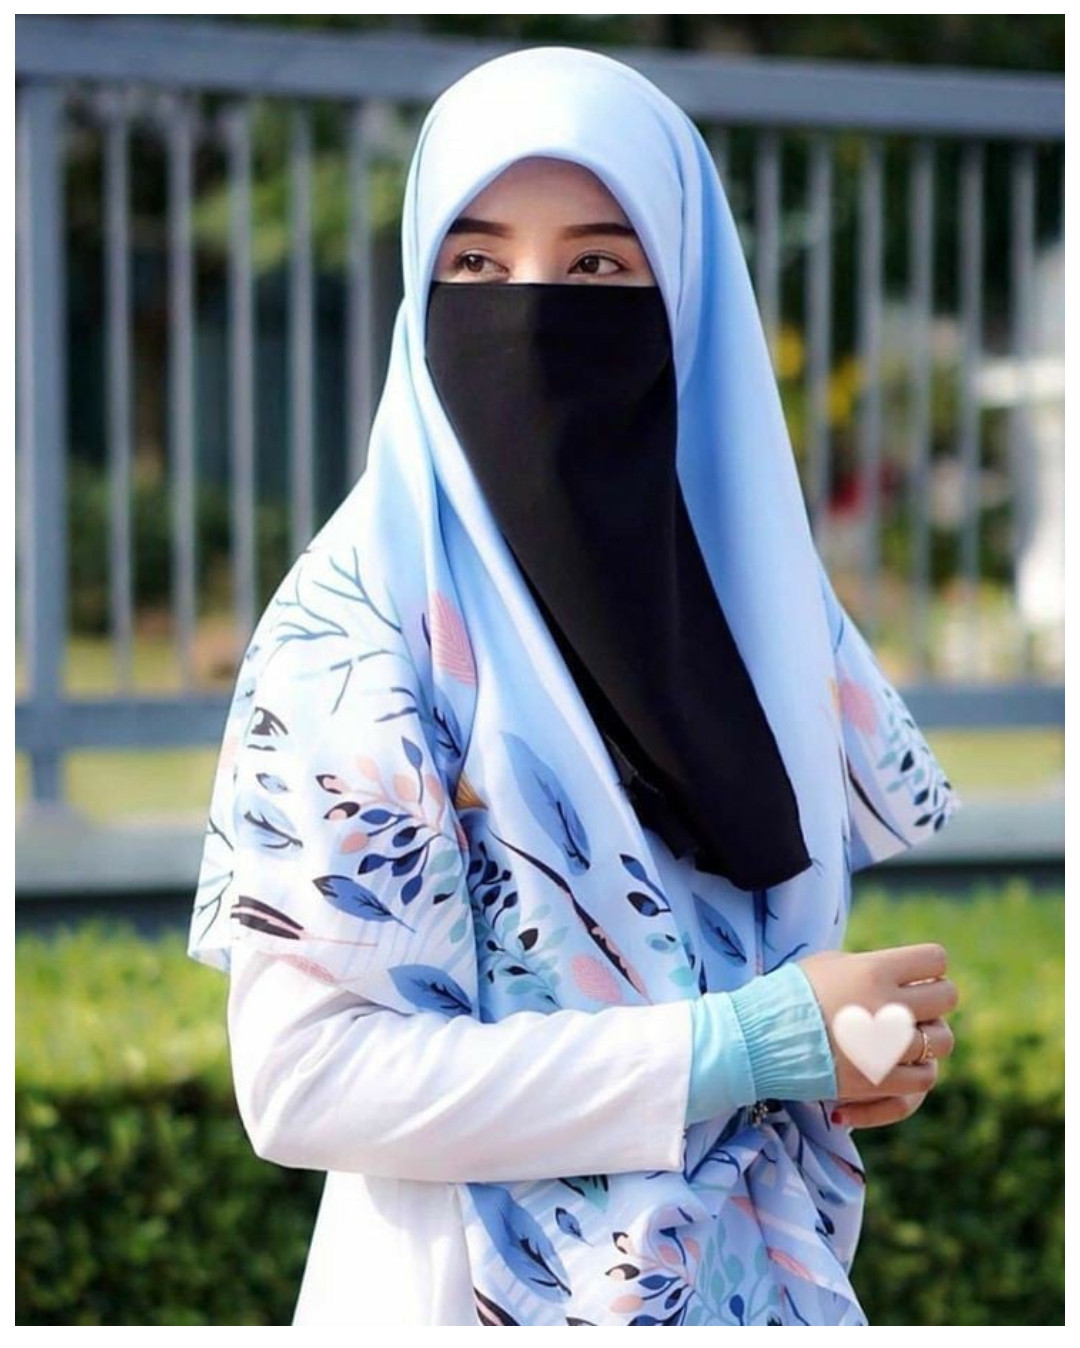 Girls wearing hijab pic - black hijab wearing pic - hijab pic